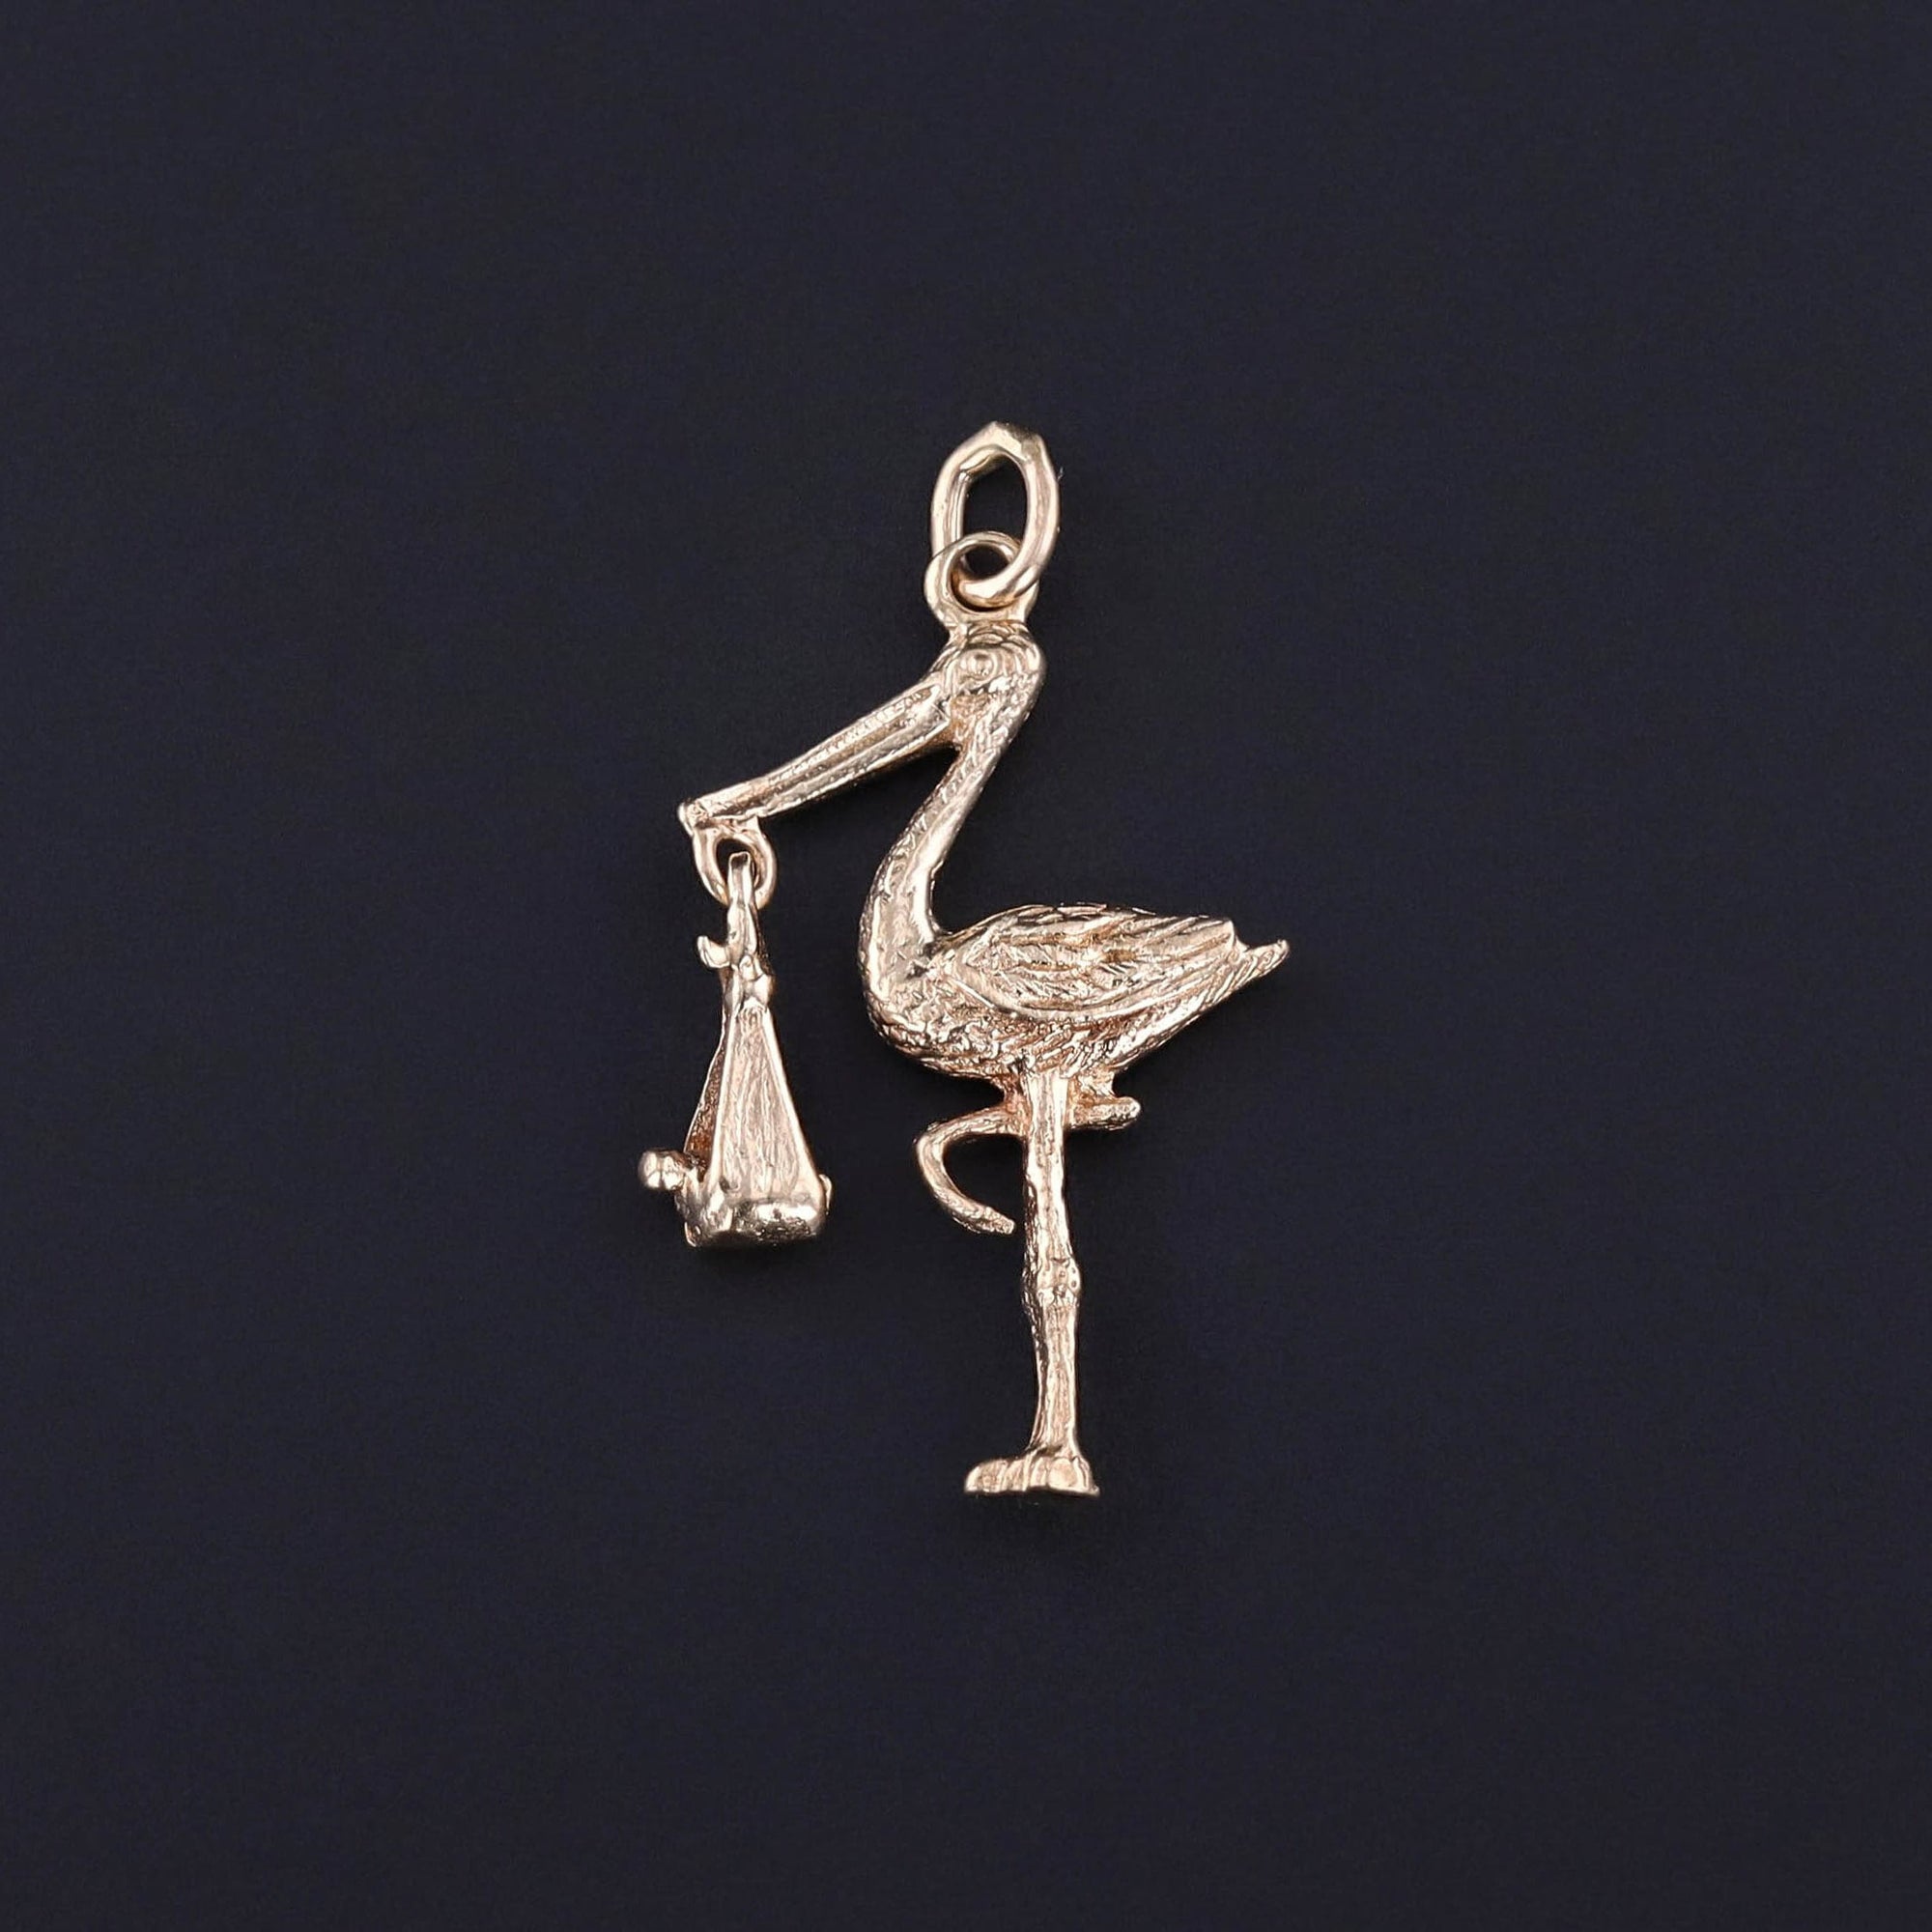 Vintage Moveable Stork Charm of 14k Gold